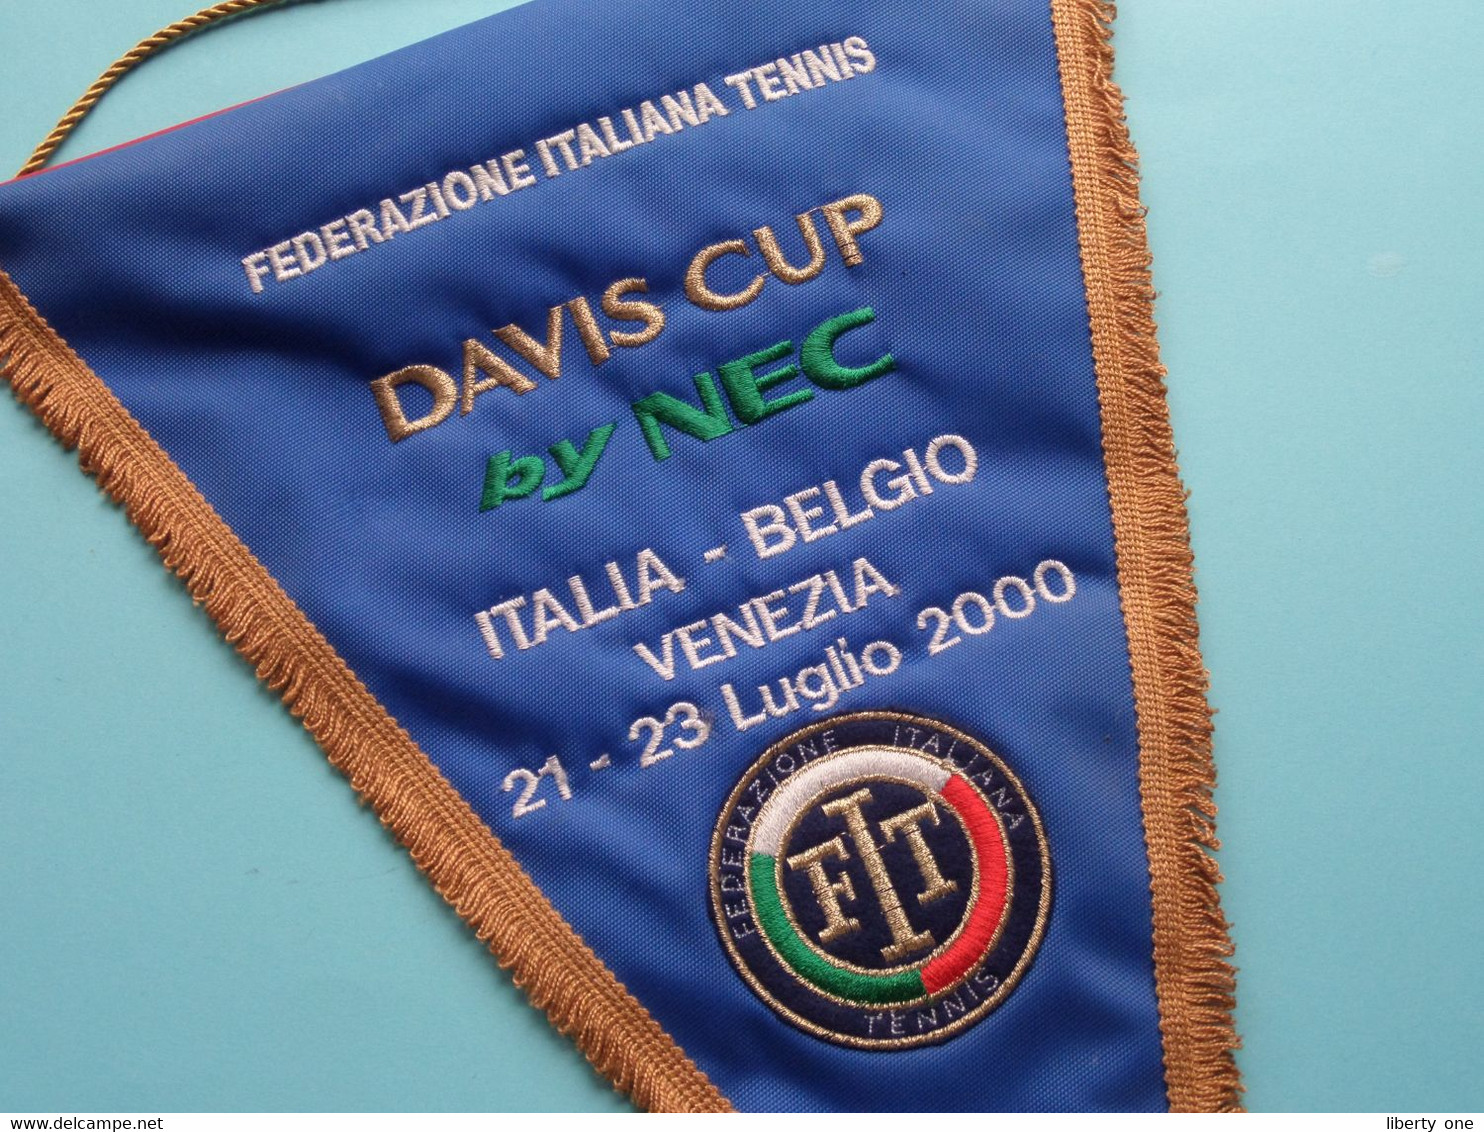 Federazione ITALIANA Tennis DAVIS CUP By NEC - ITALIA / BELGIO - 2000 ( See / Voir SCAN ) Wimpel - Pennant - Fanion ! - Bekleidung, Souvenirs Und Sonstige